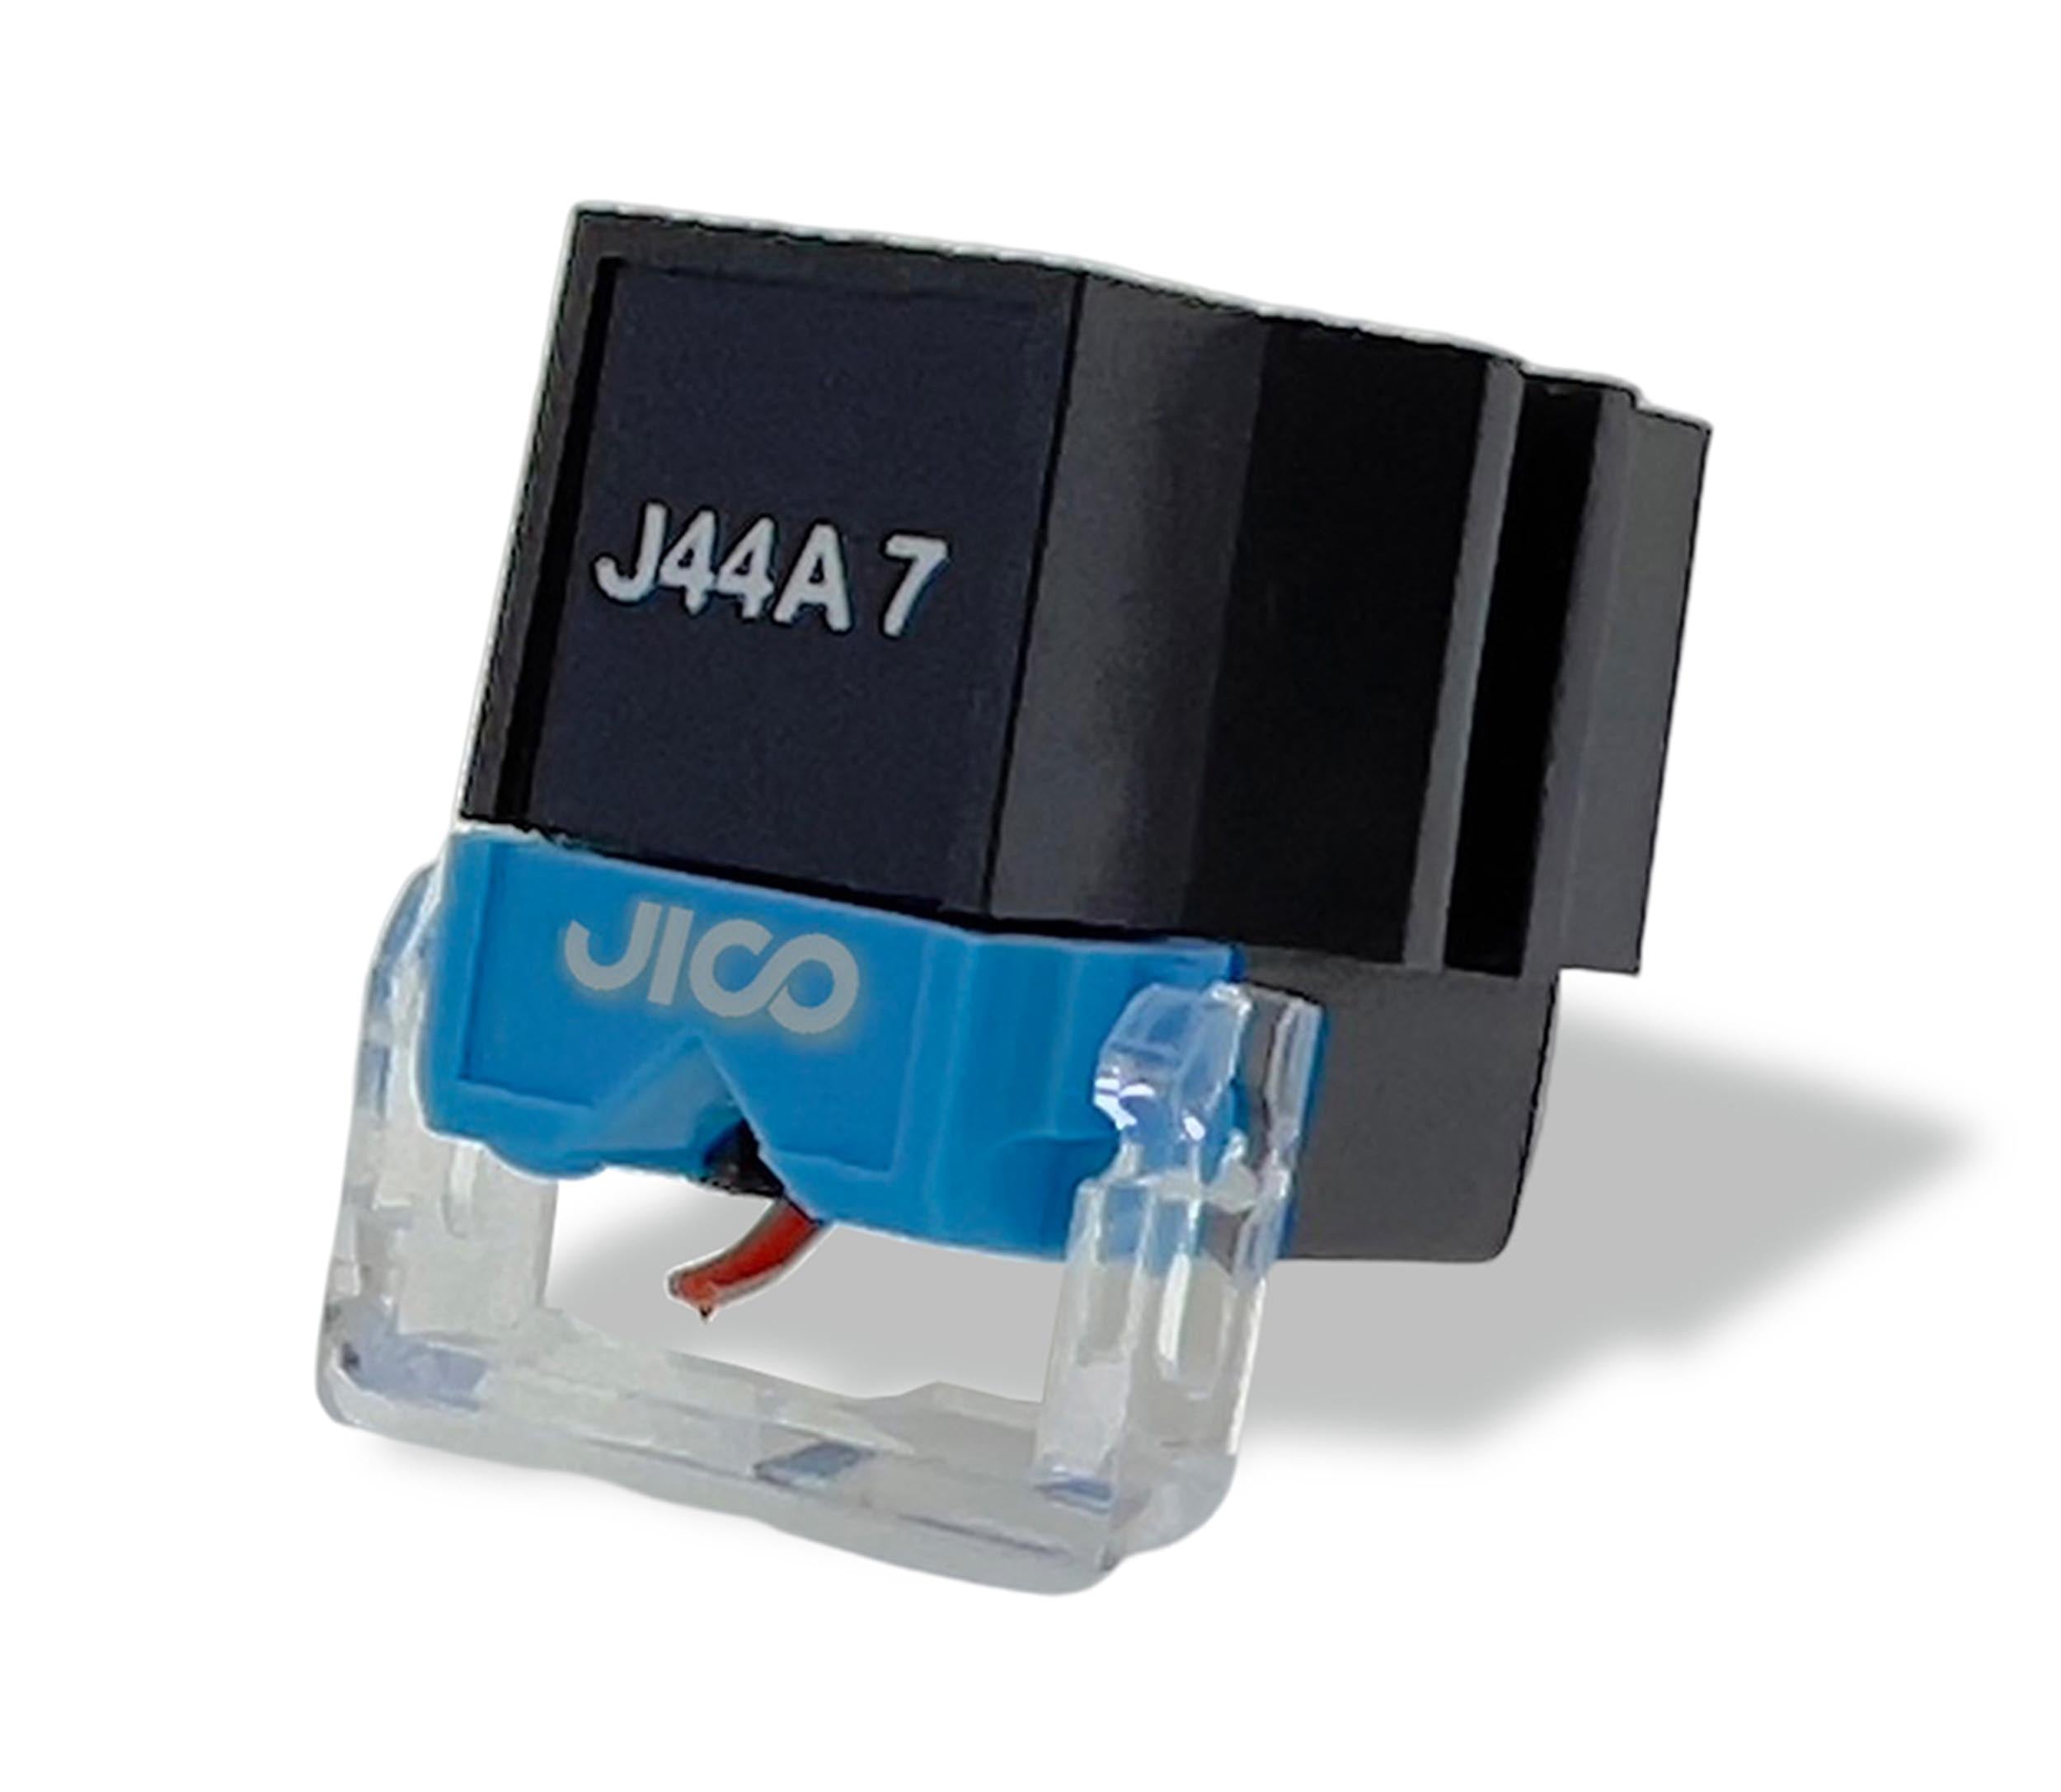 Jico J-AAC0624, J44A 7 DJ Improved SD Cartridge Jico